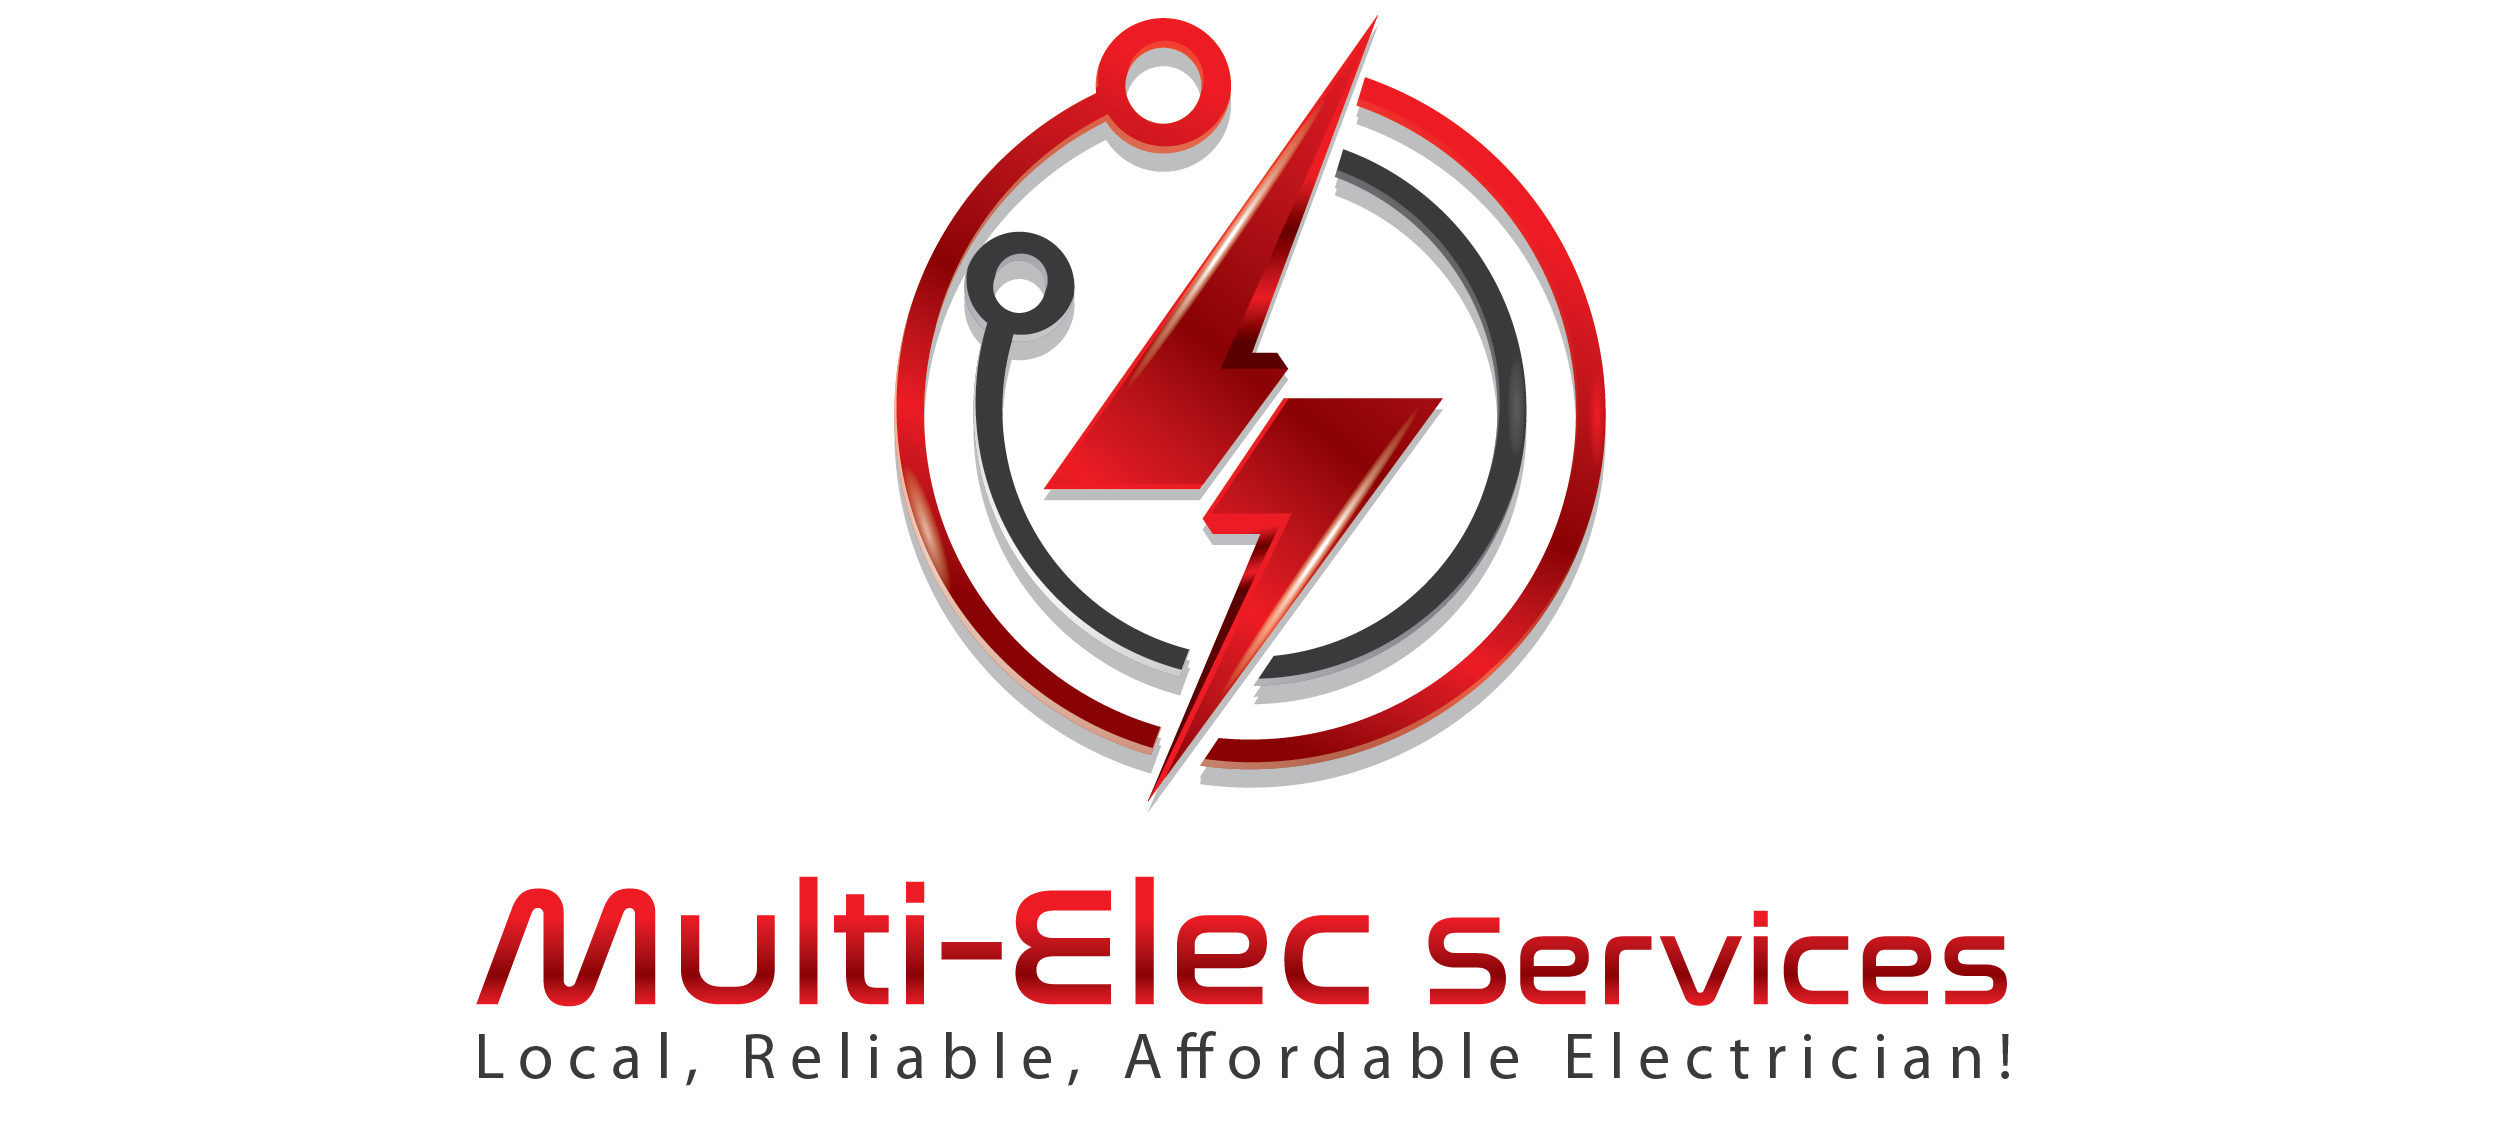 Multi-Elec Services Limited